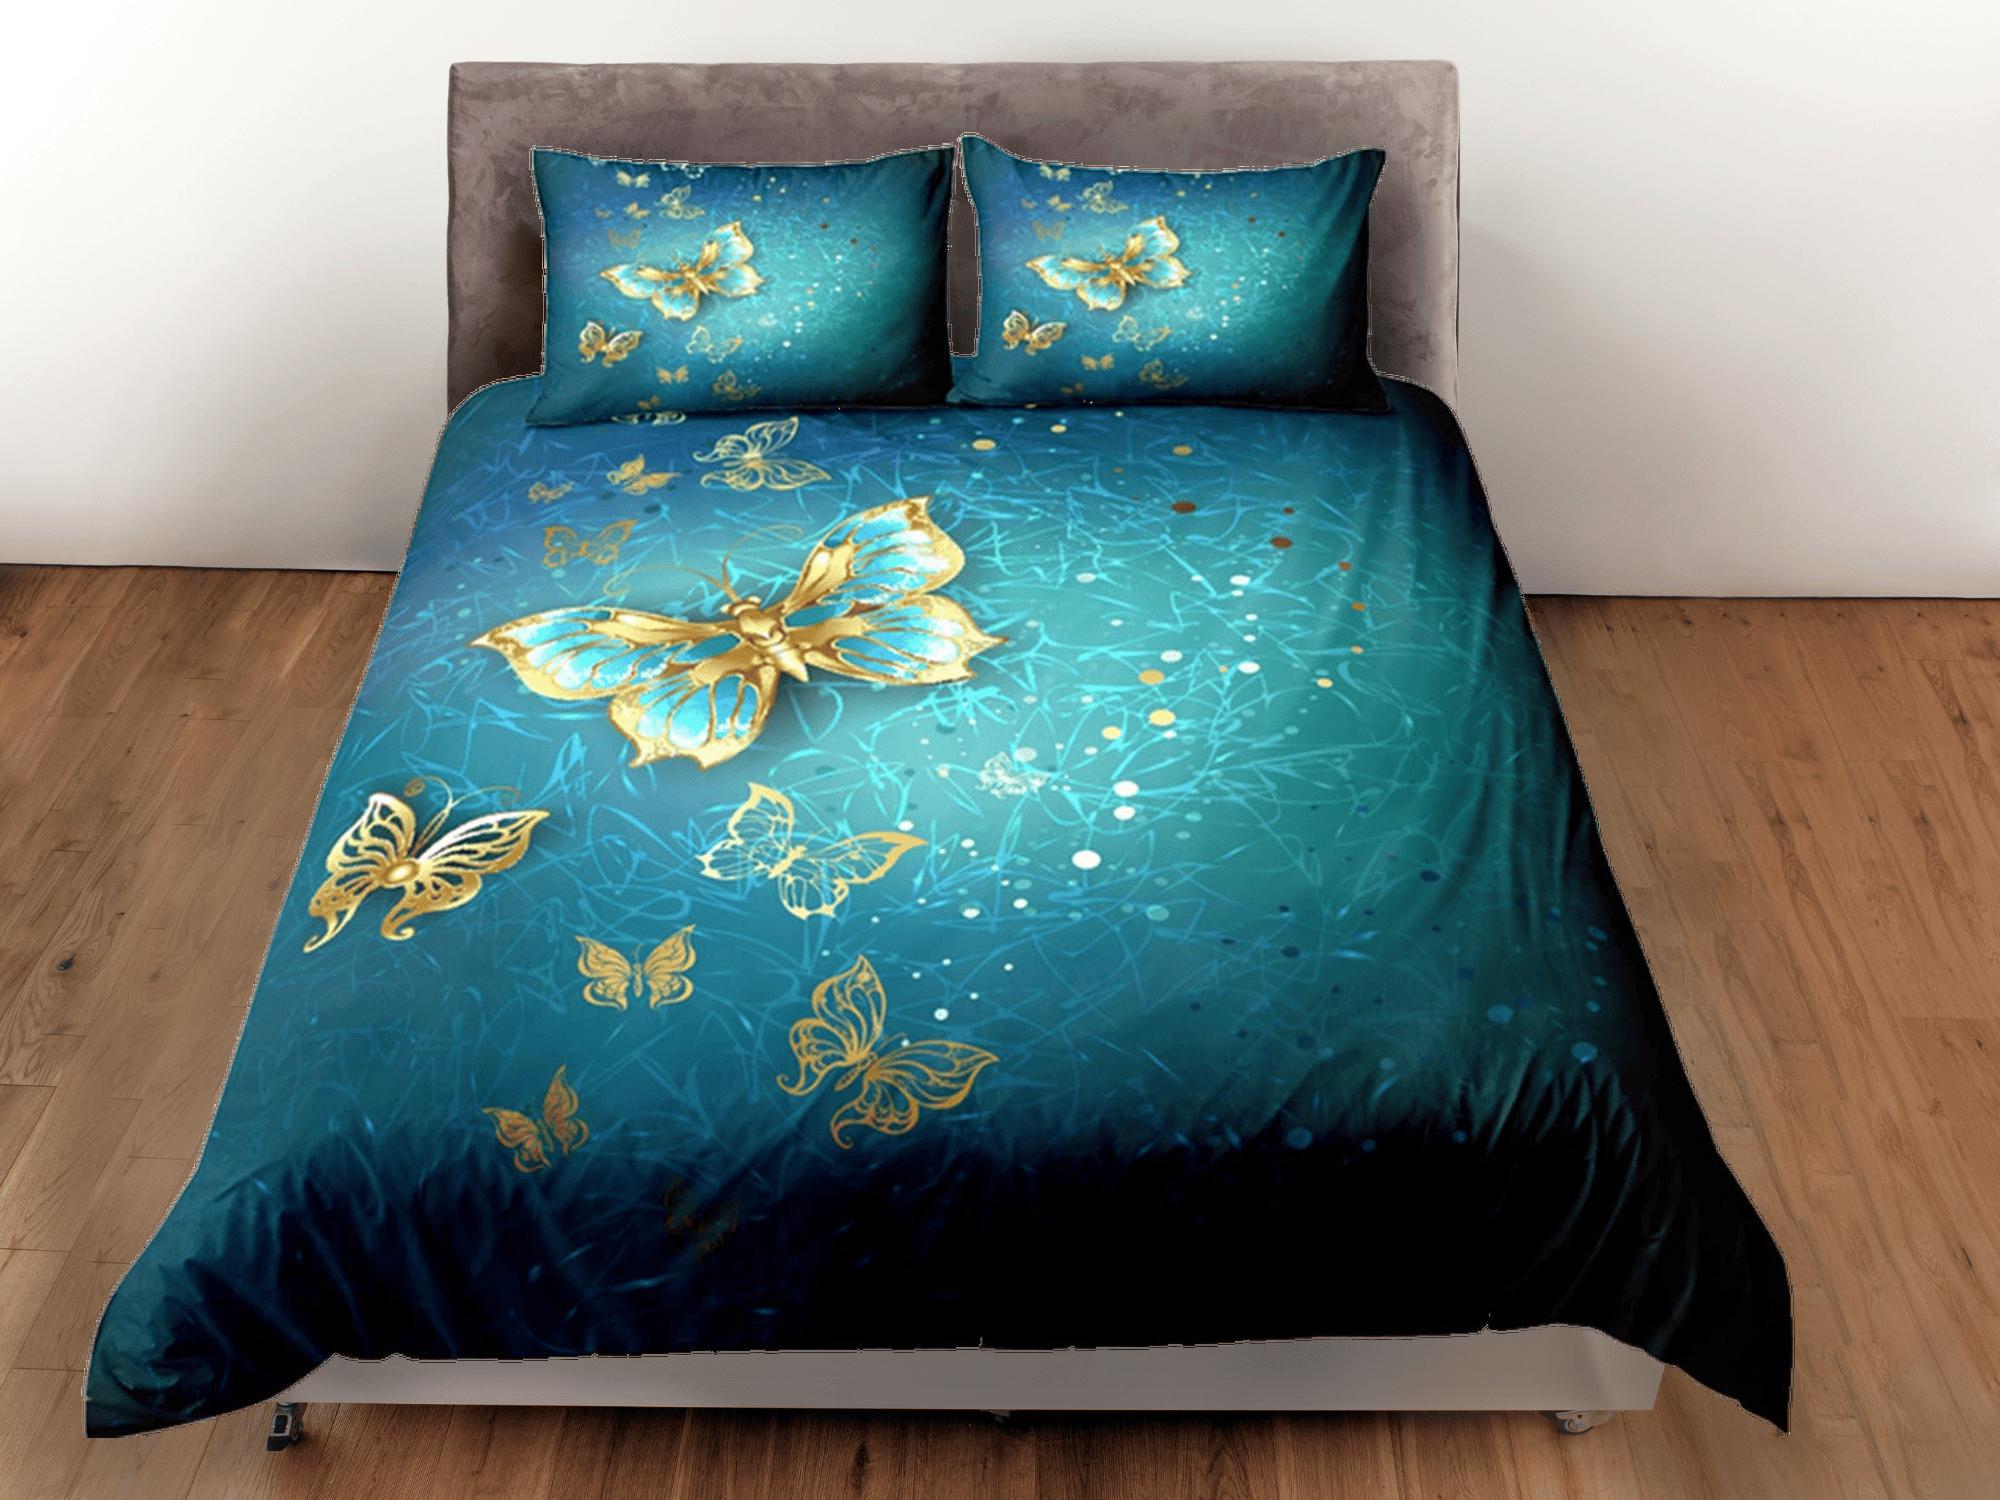 daintyduvet Butterfly Duvet Cover Set Green Bedspread, Dorm Bedding with Pillowcase